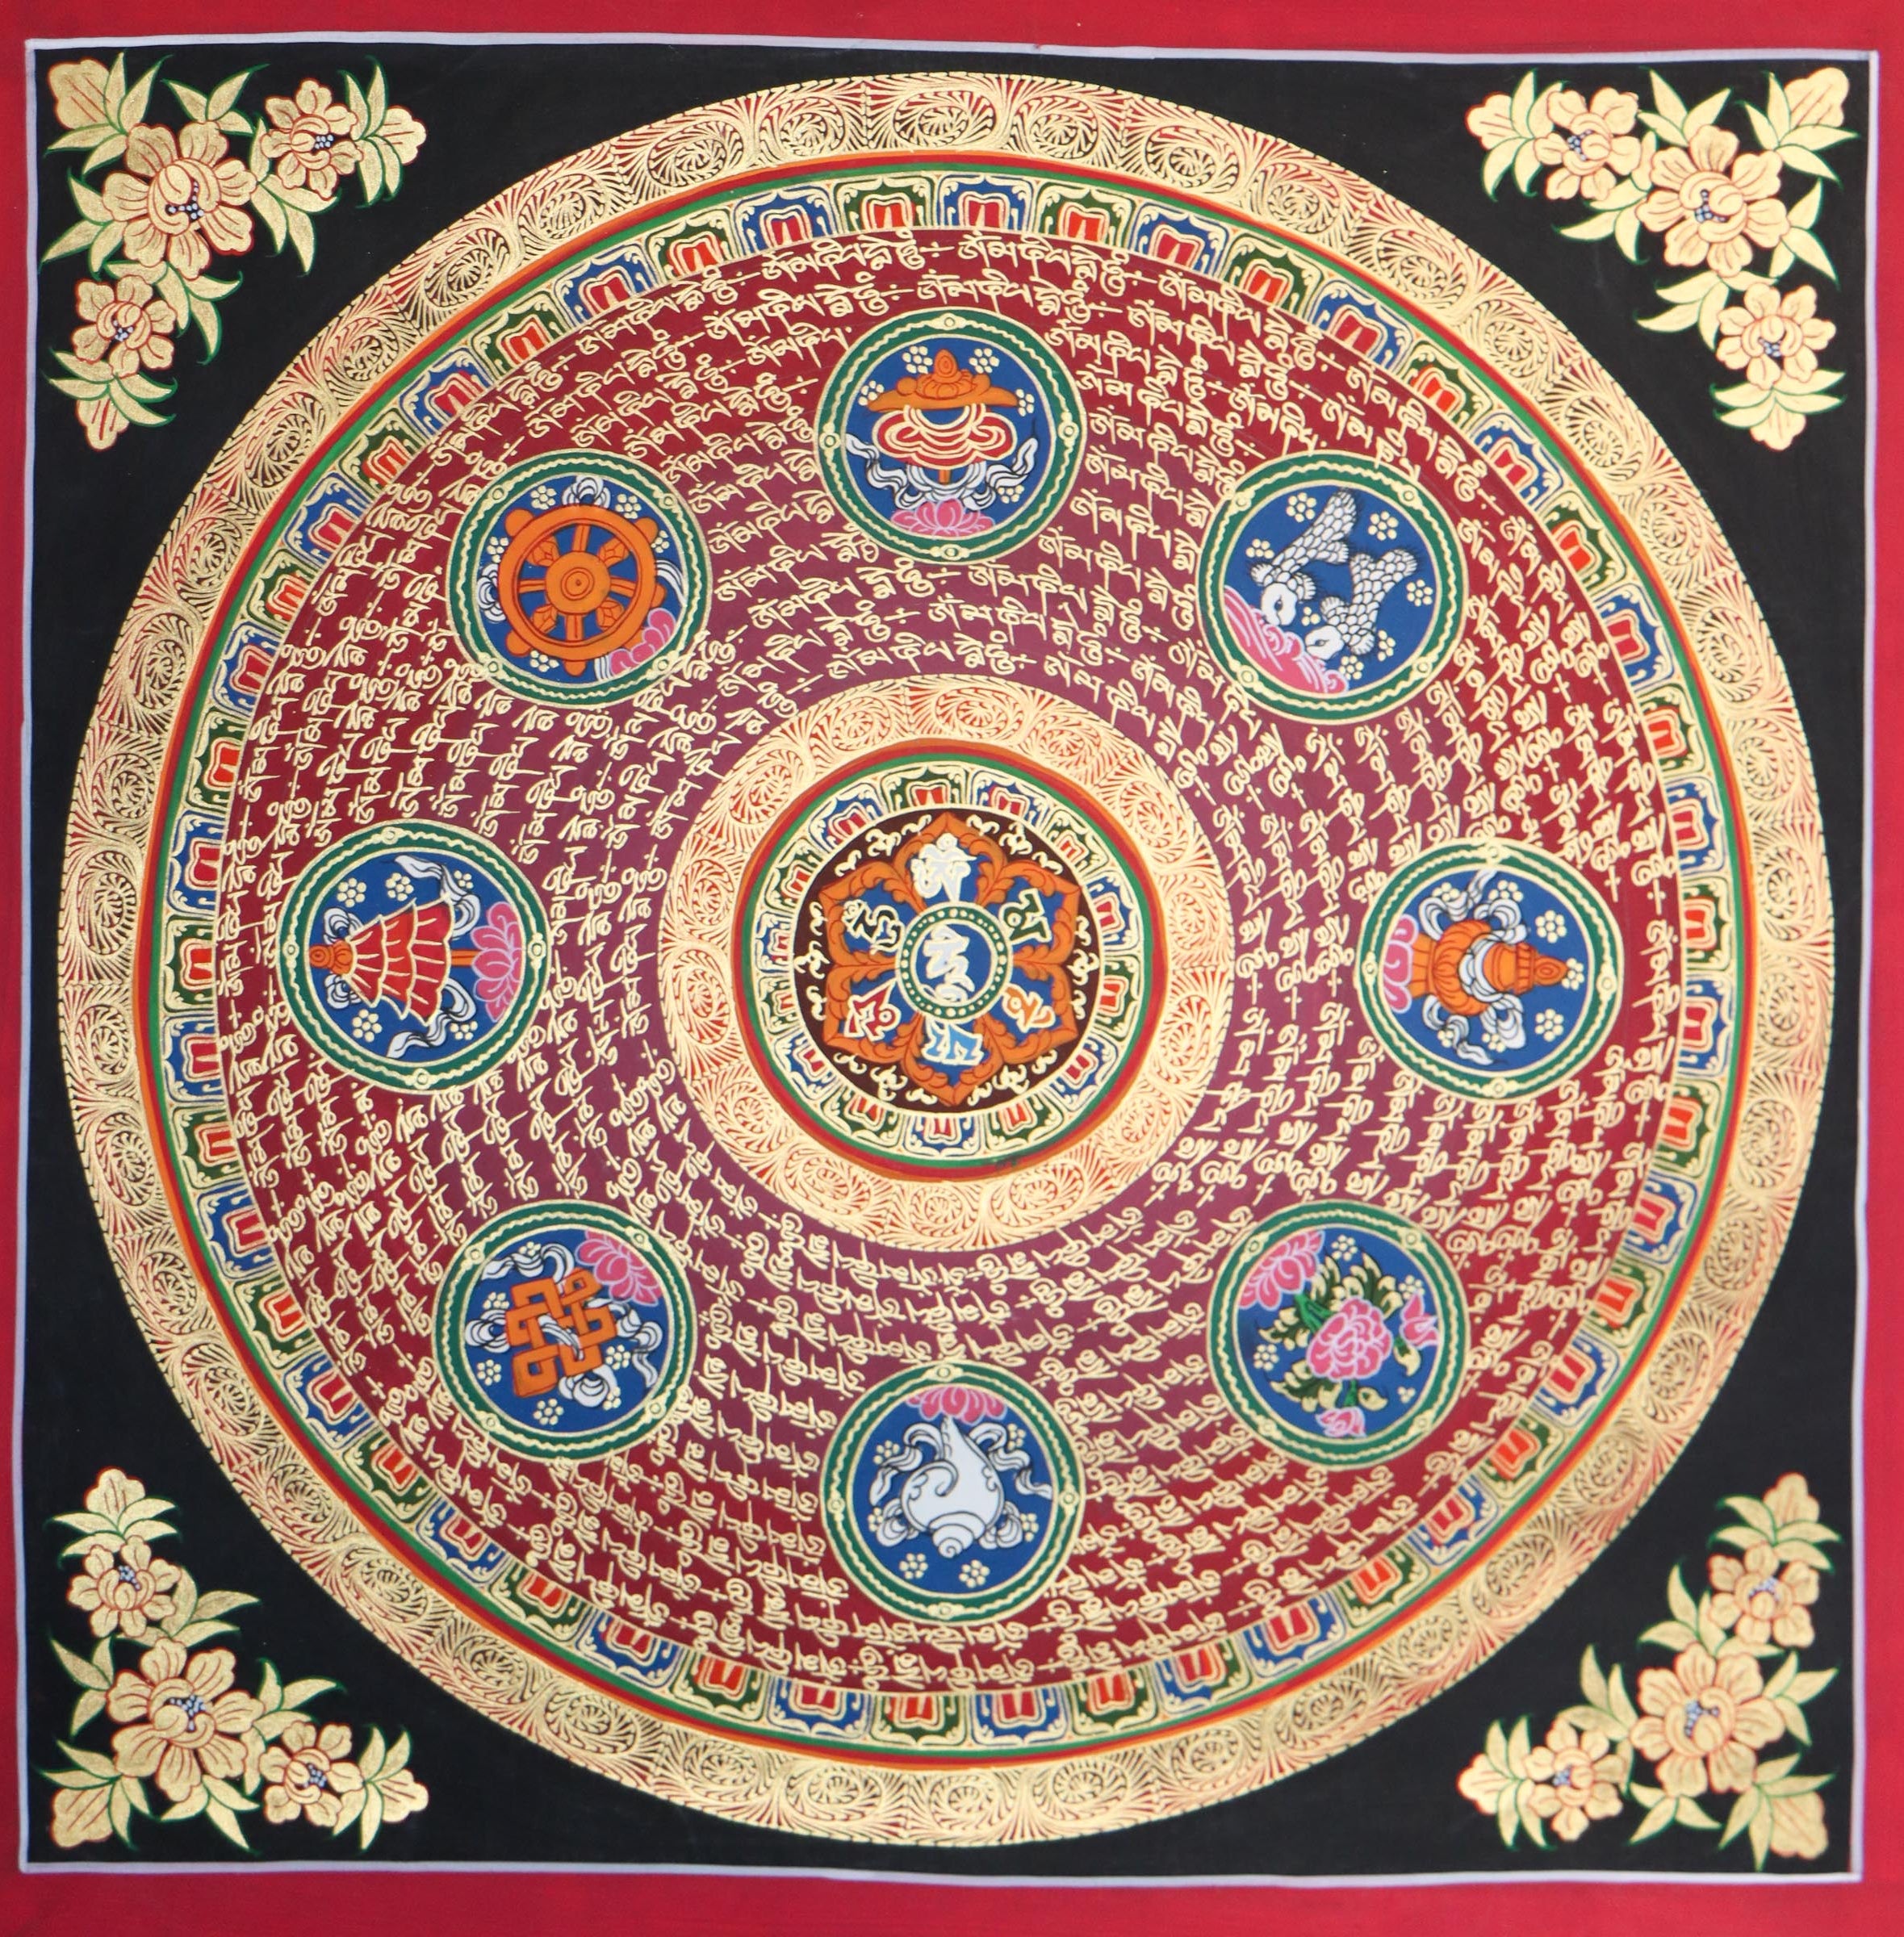  Mantra Mandala Thangka for enlightenment and spiritual qualities,